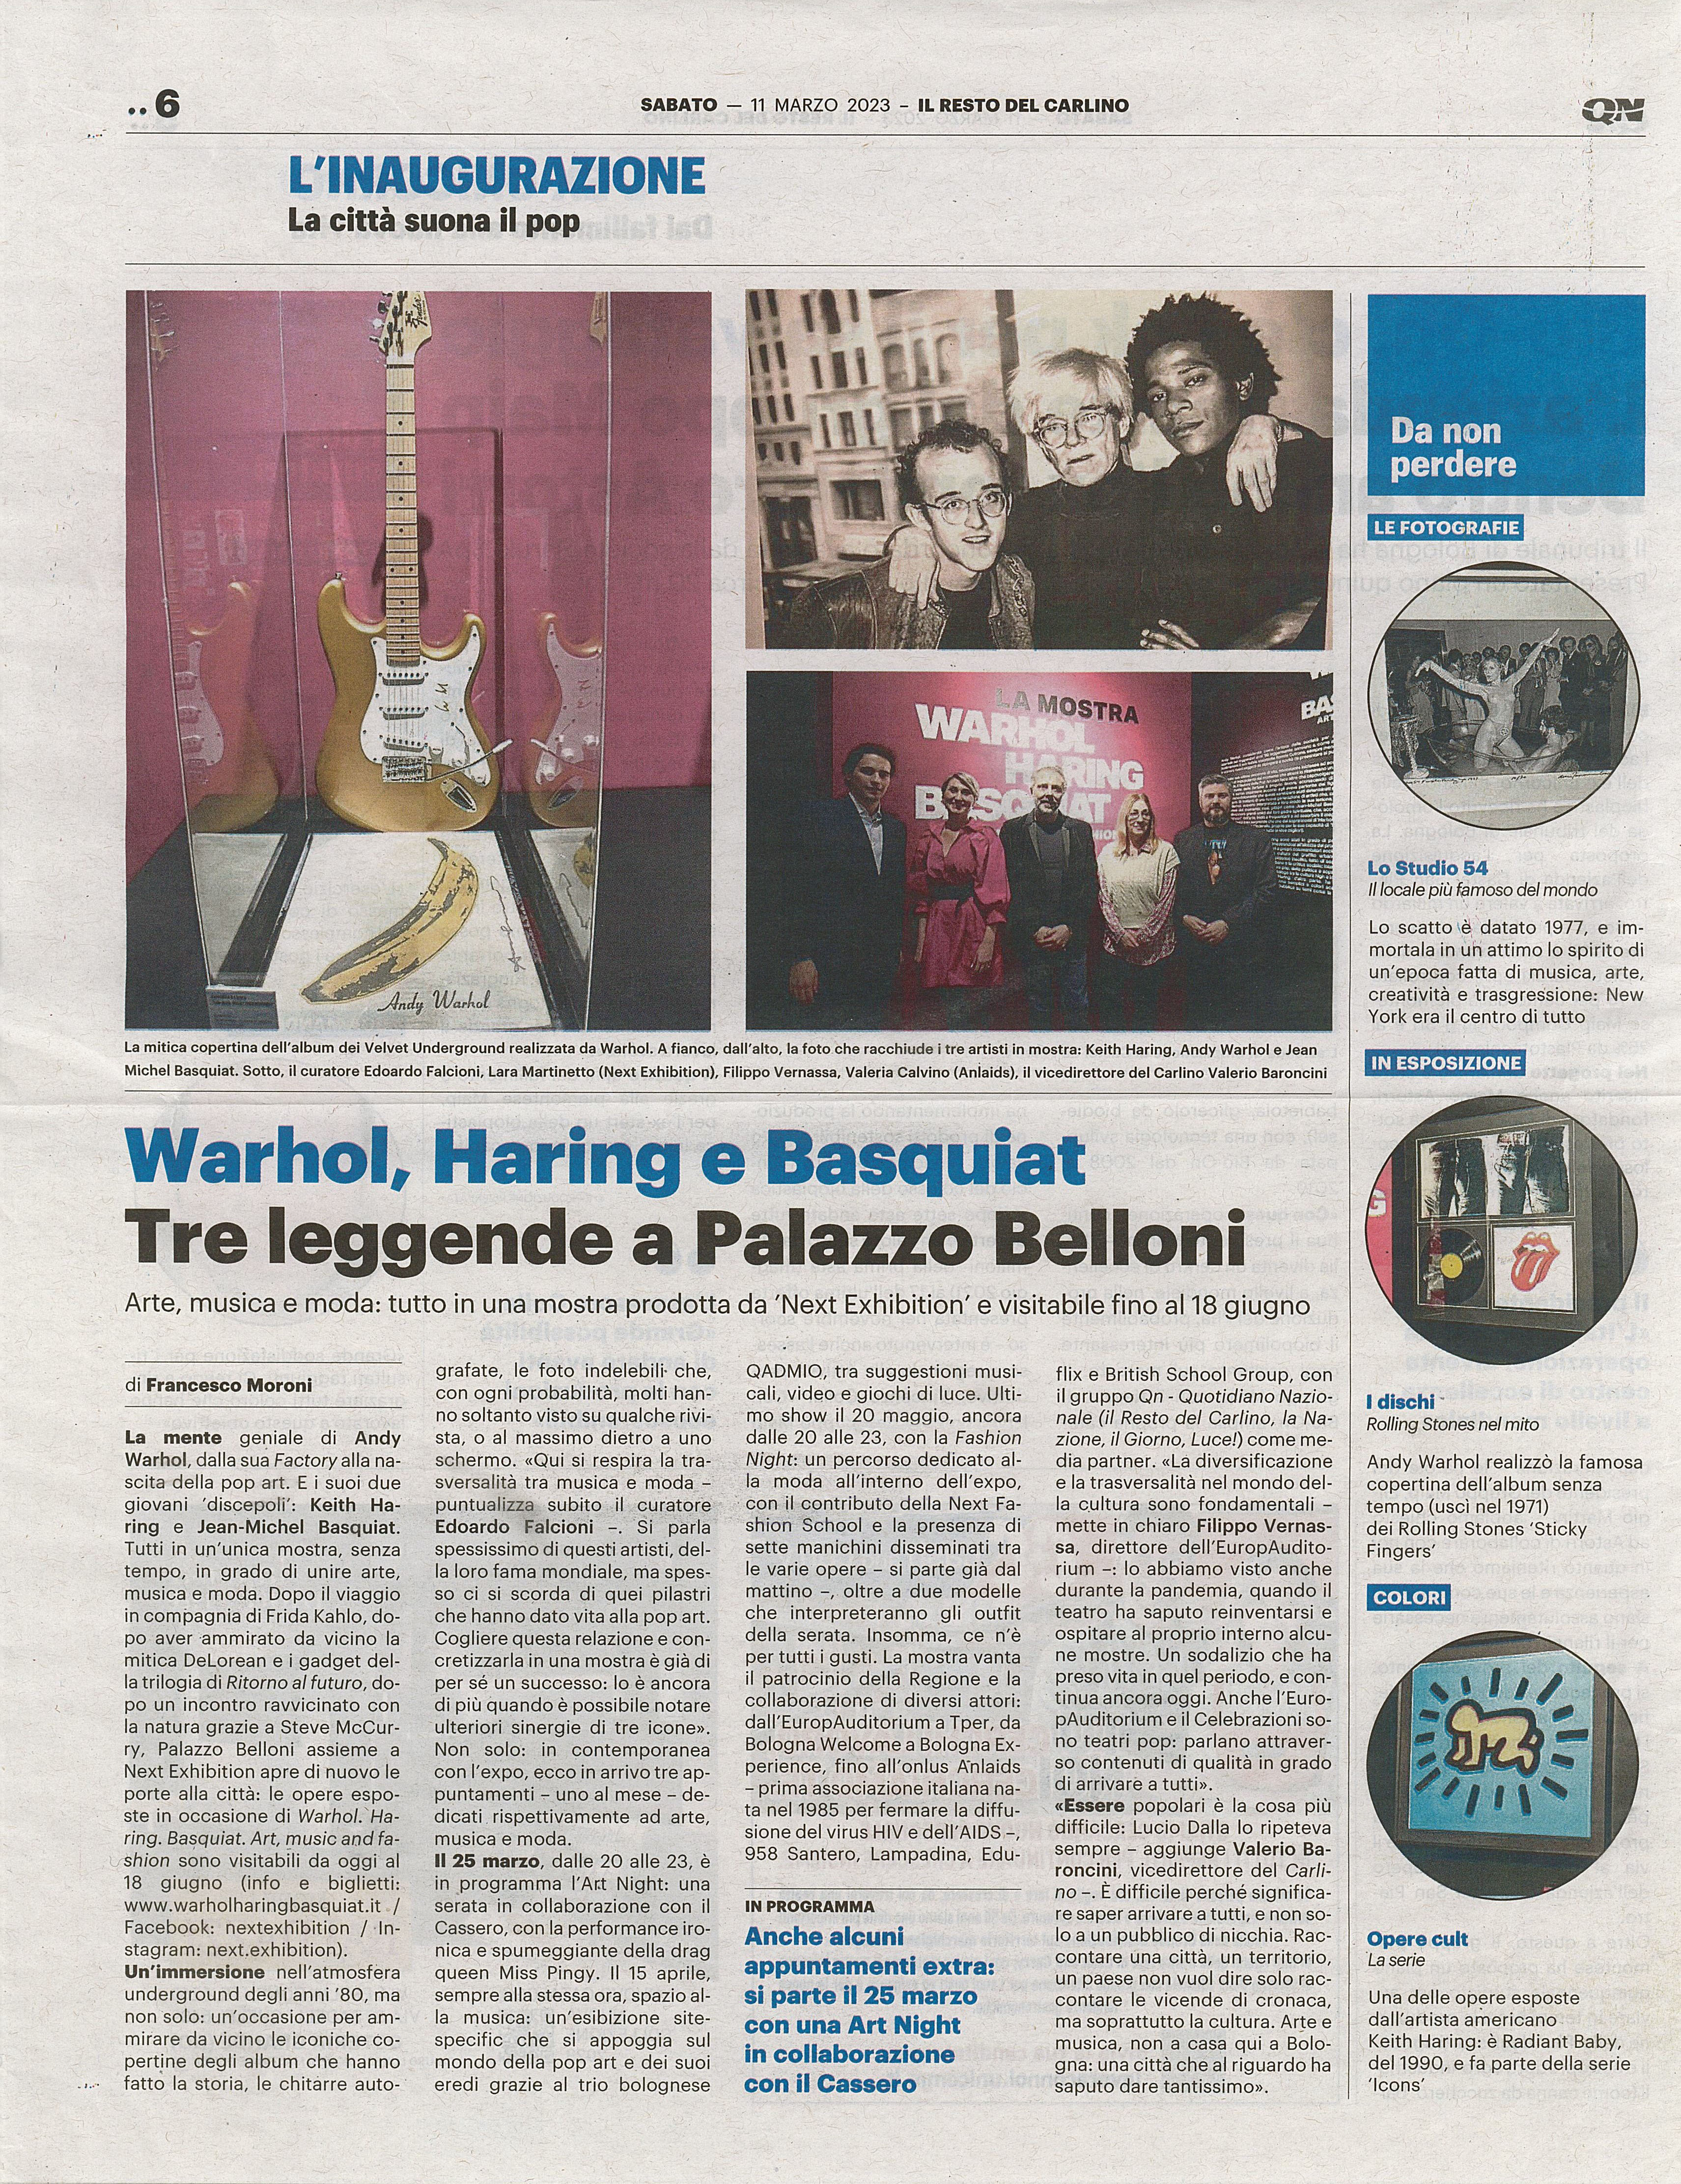 Warhol Haring e Basquiat, tre leggende a Palazzo Belloni